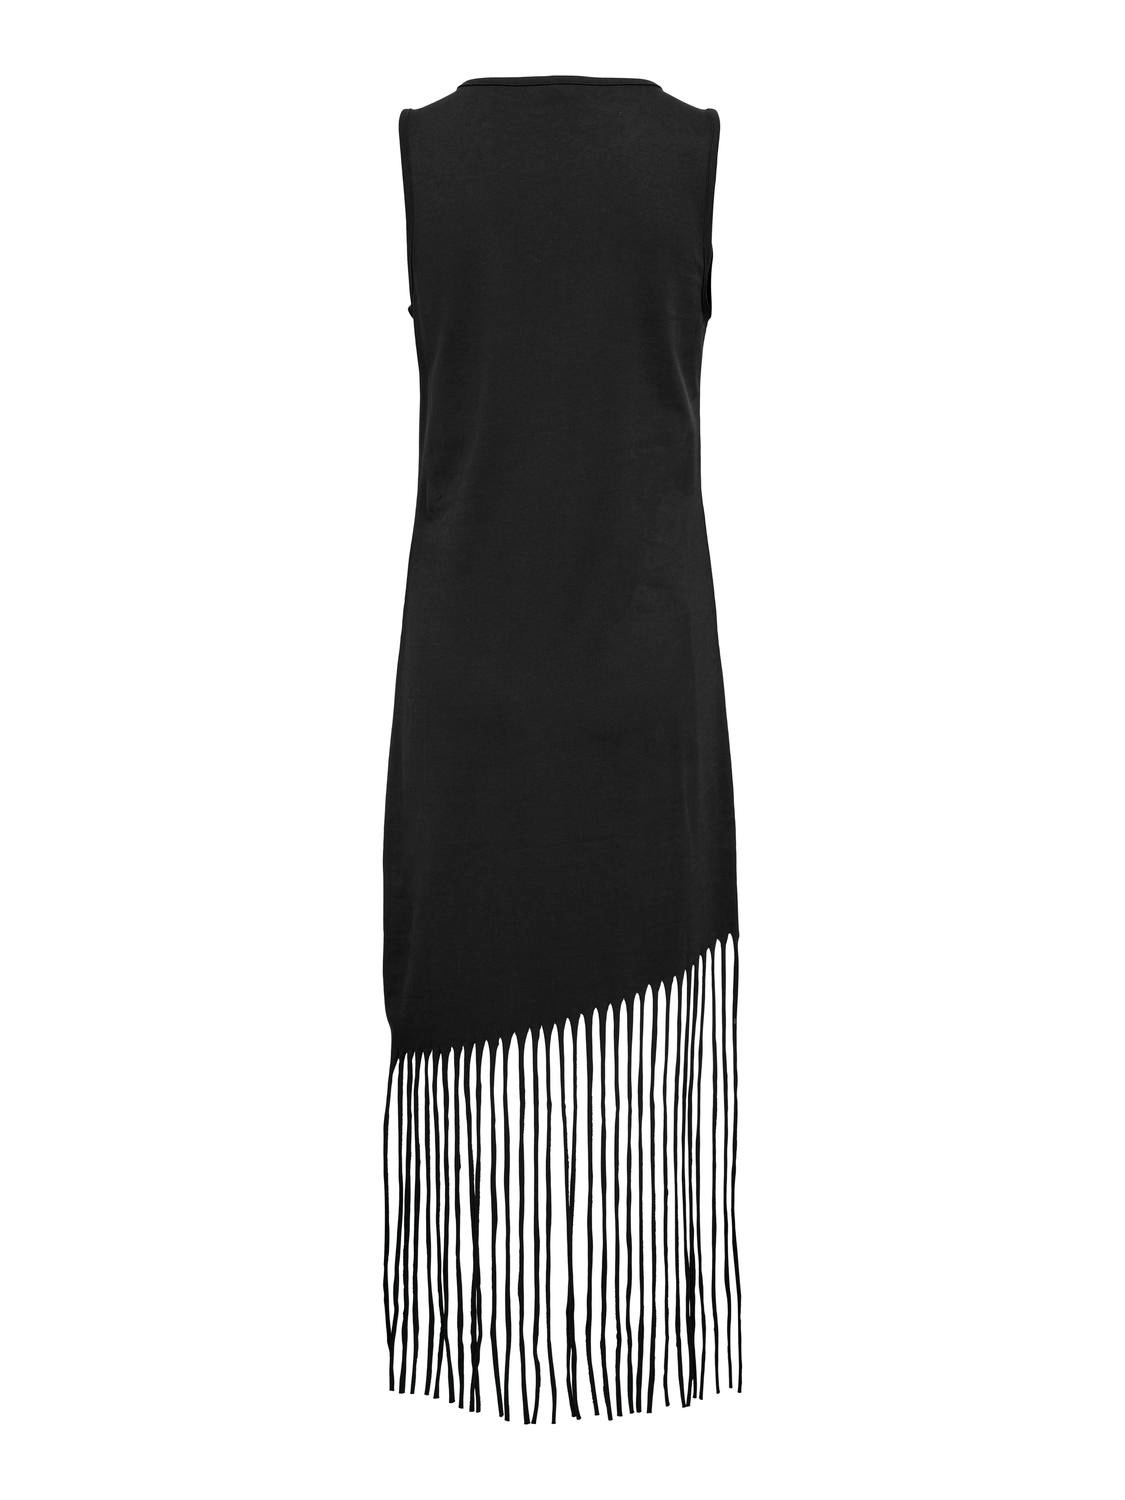 ONLY Maxi o-hals kjole med frynser -Black - 15325497